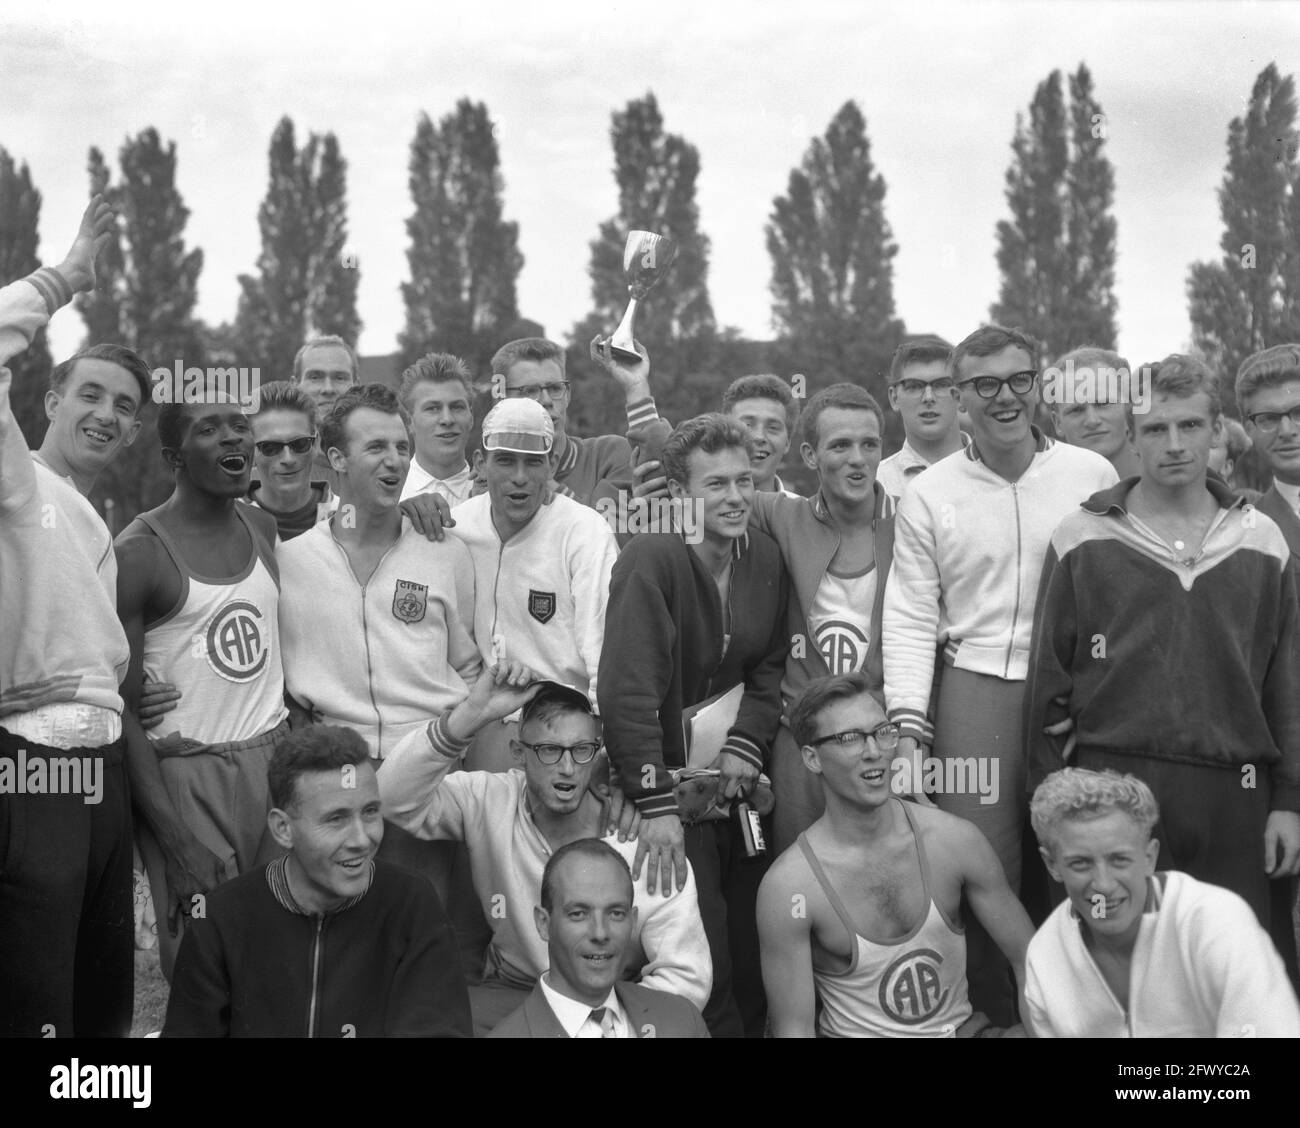 Athletics club championship Black and White Stock Photos & Images - Alamy